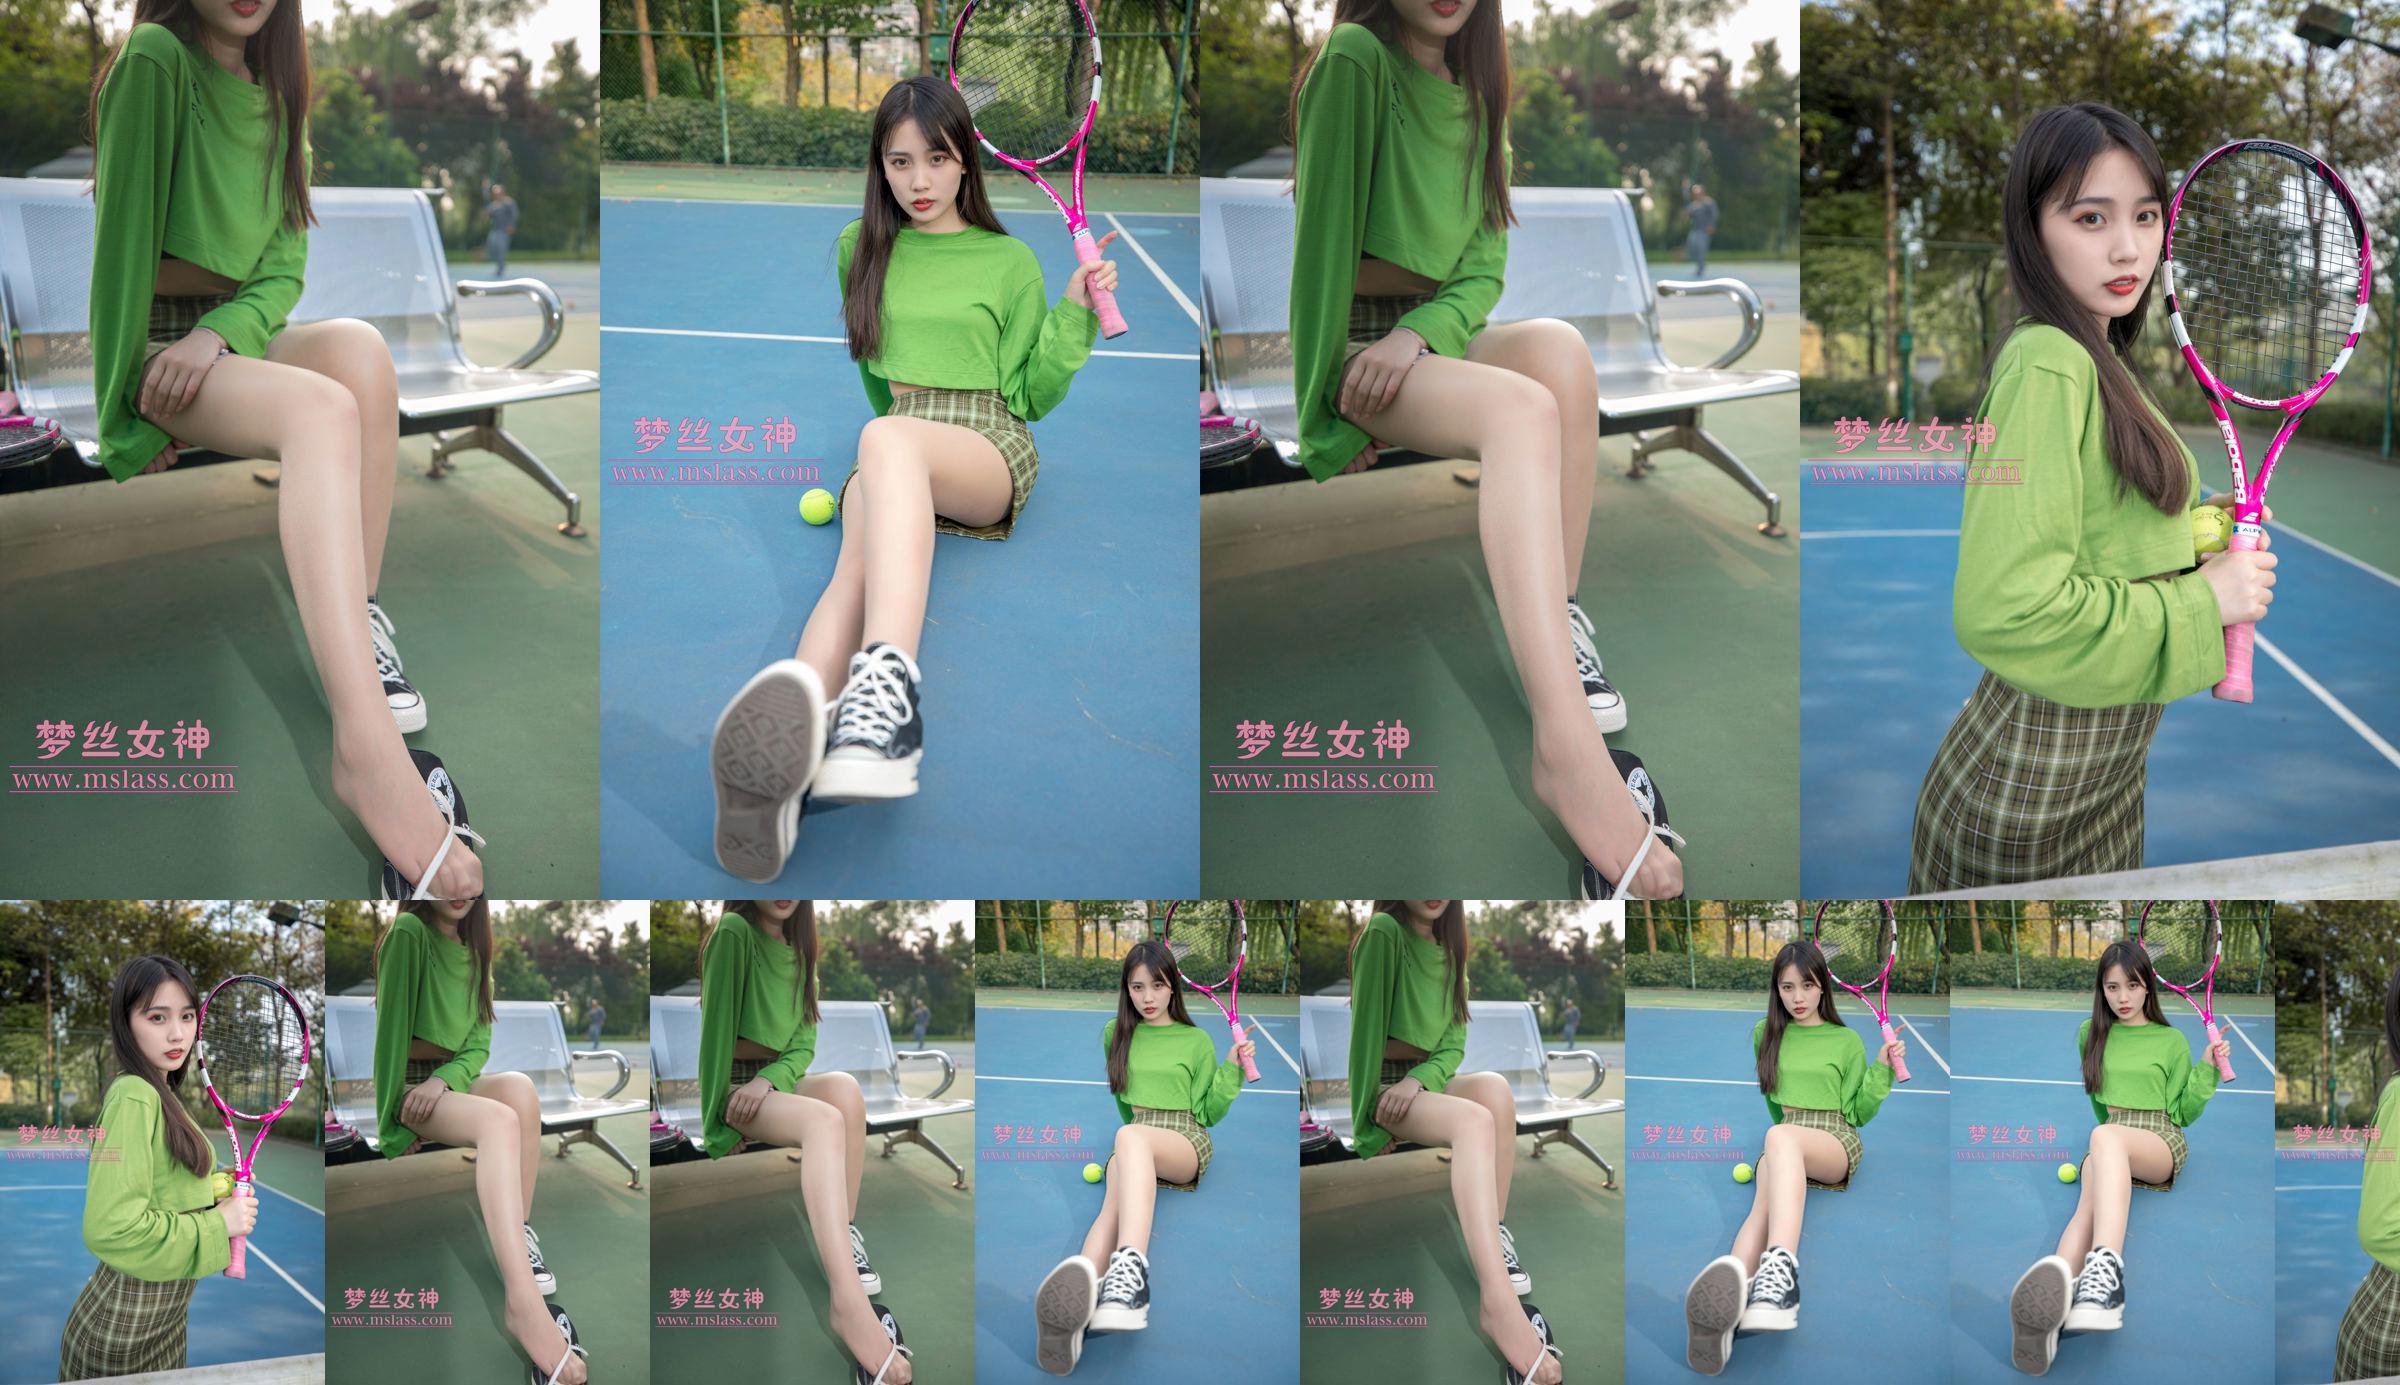 [Diosa de los sueños MSLASS] Chica del tenis Xiang Xuan No.e0f2a6 Página 3